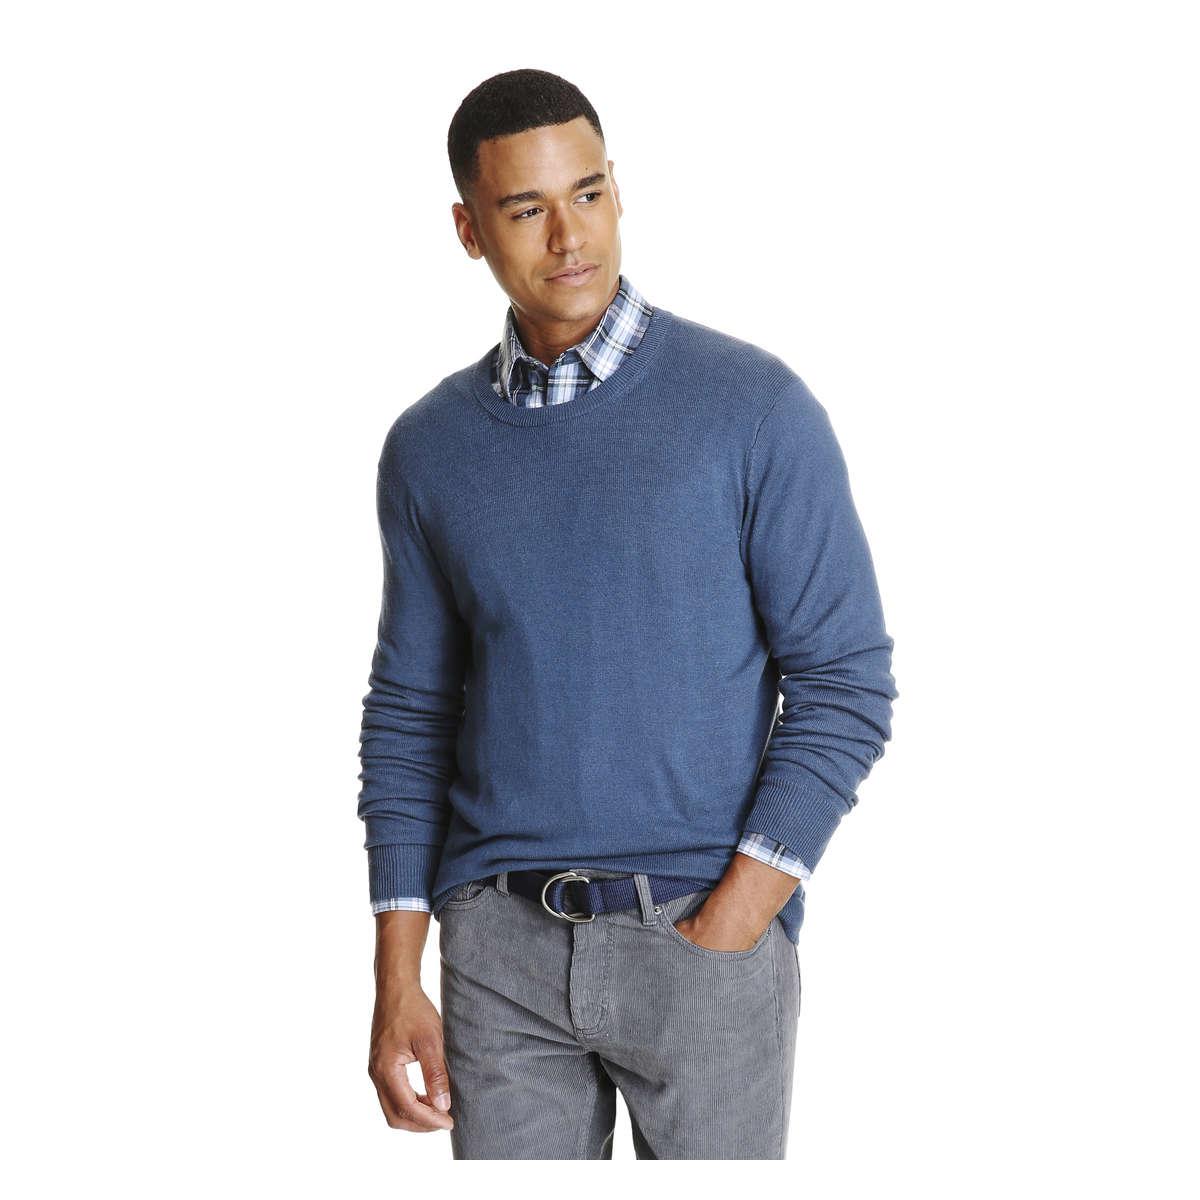 Lyst - Joe Fresh Men's Crew Neck Sweater in Blue for Men